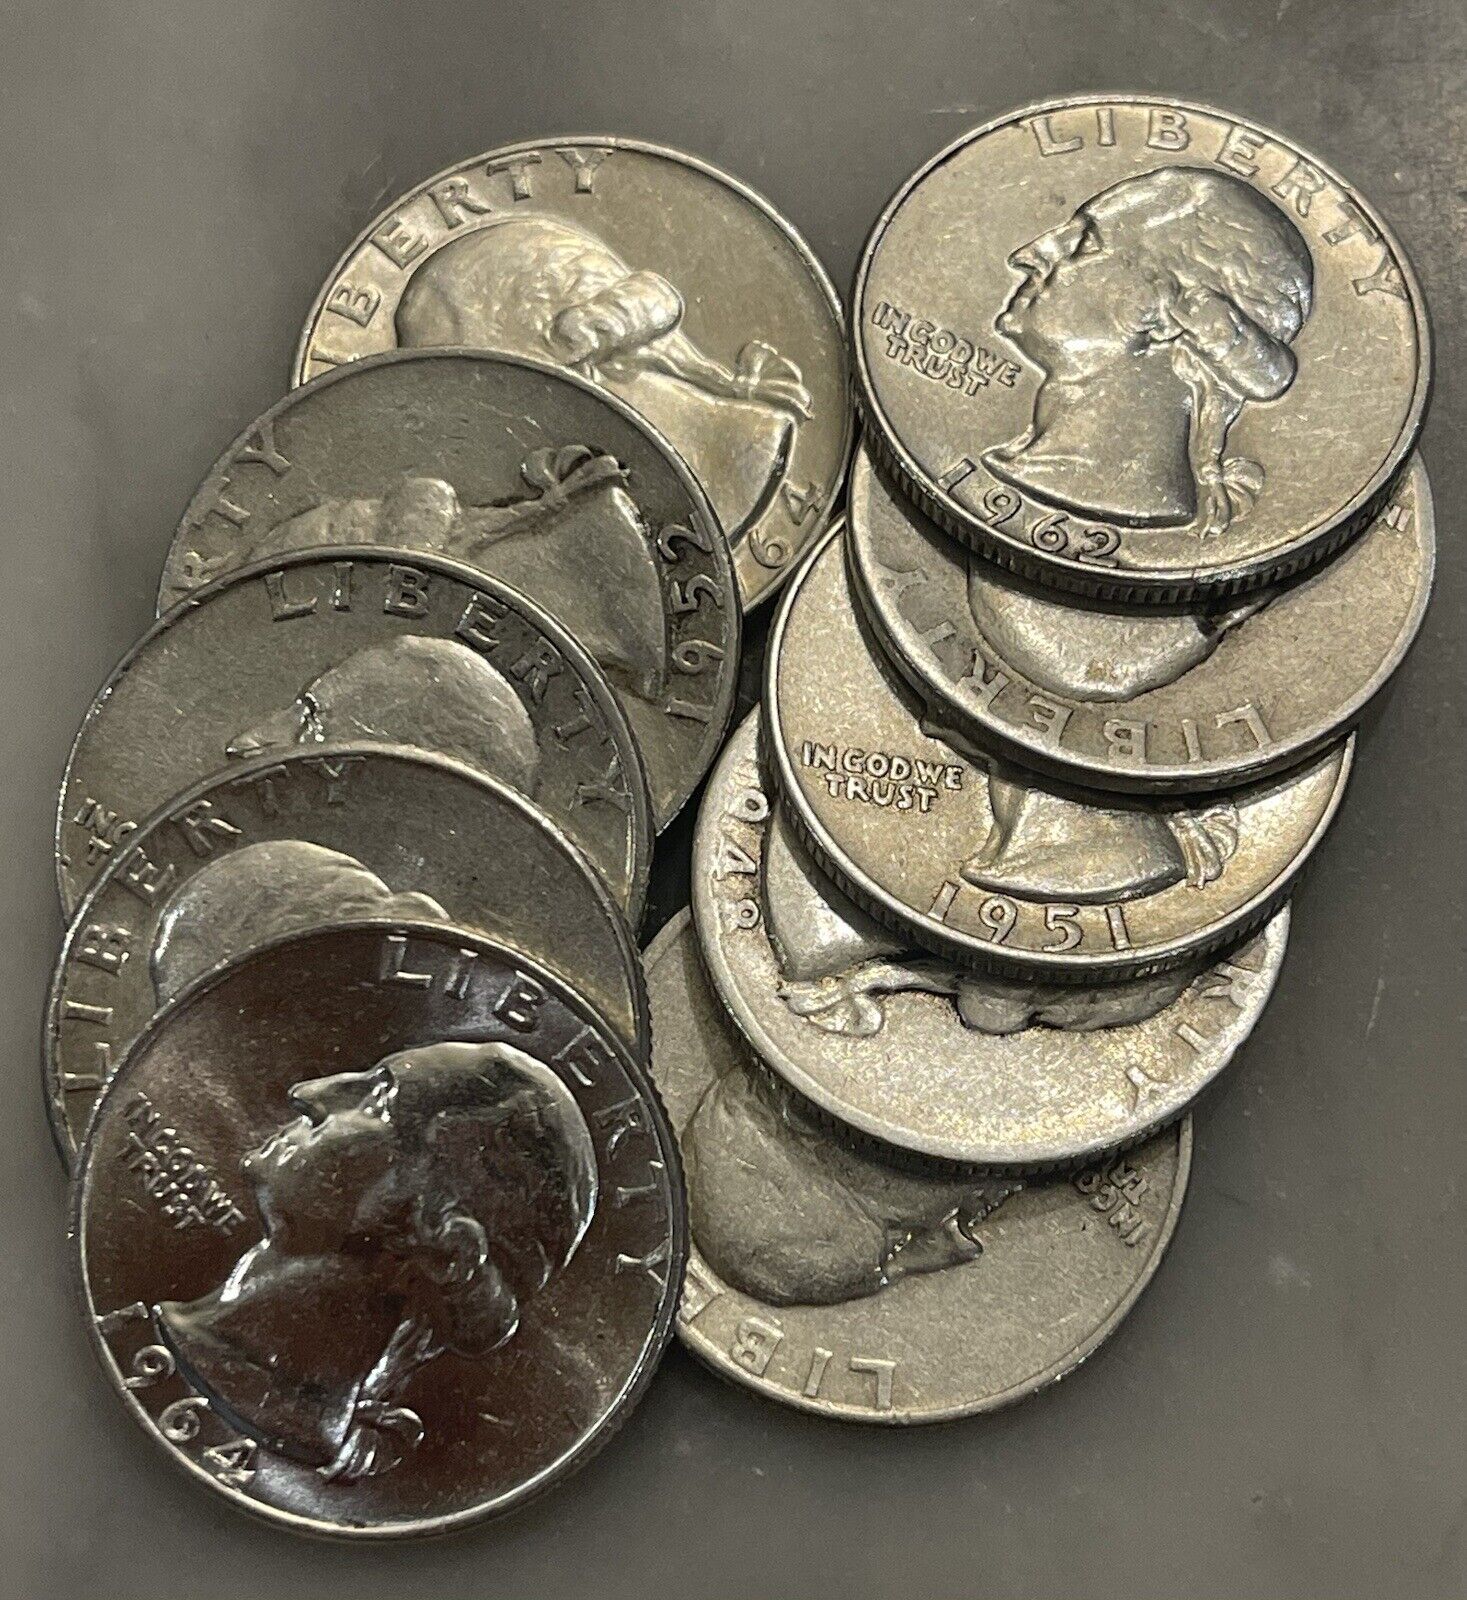 [Lot of 10] - Washington Quarter - 90% Silver Choose How Many Lots of 10